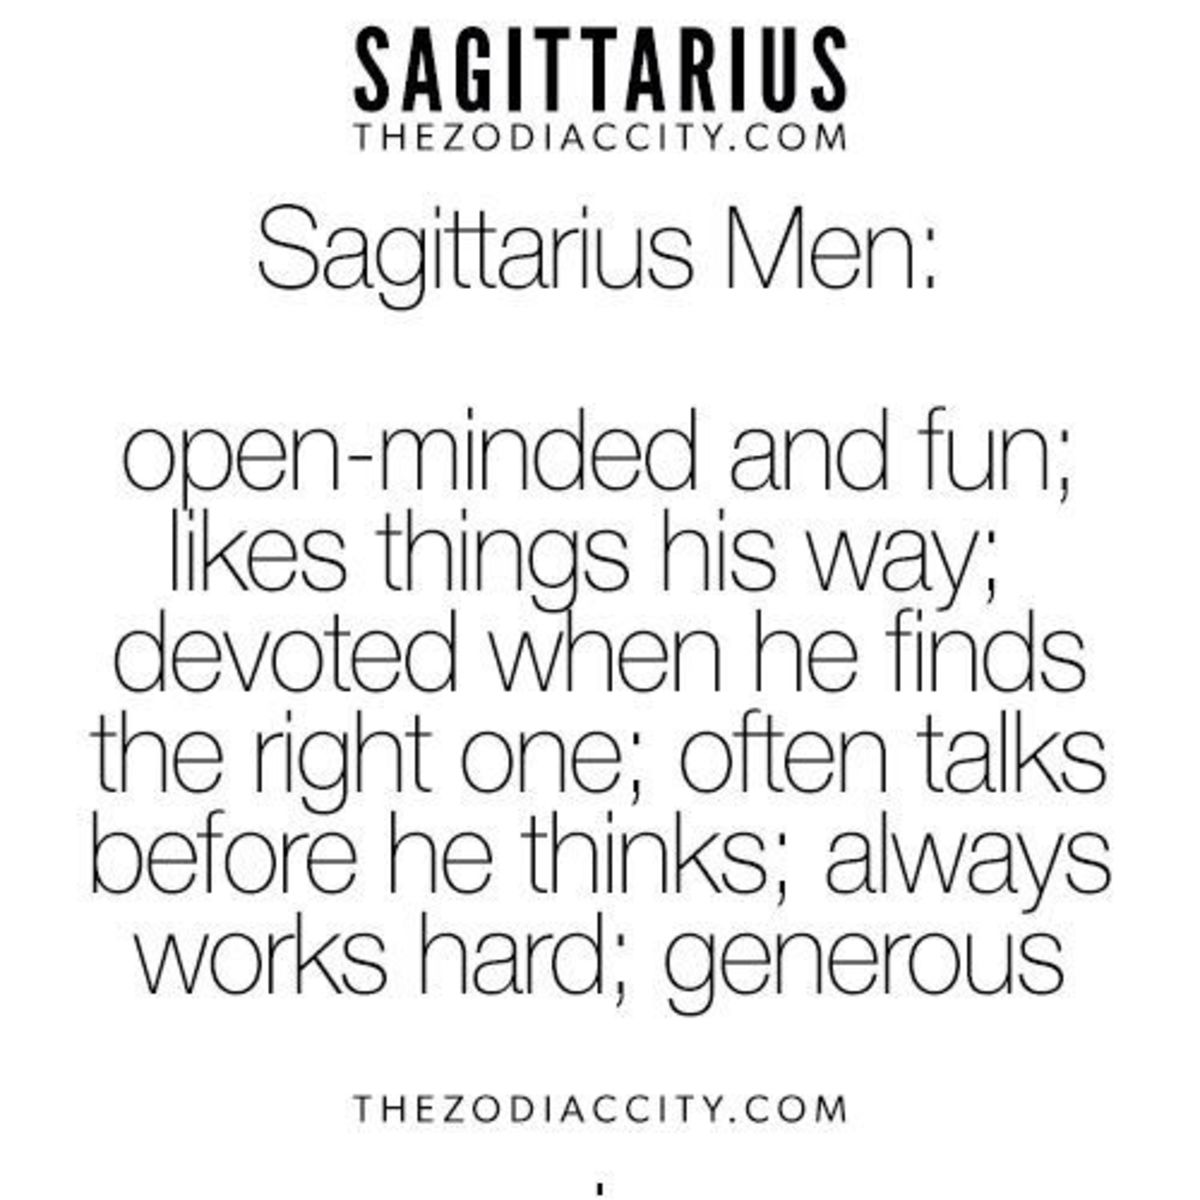 How do I know a Sagittarius man likes me? Image